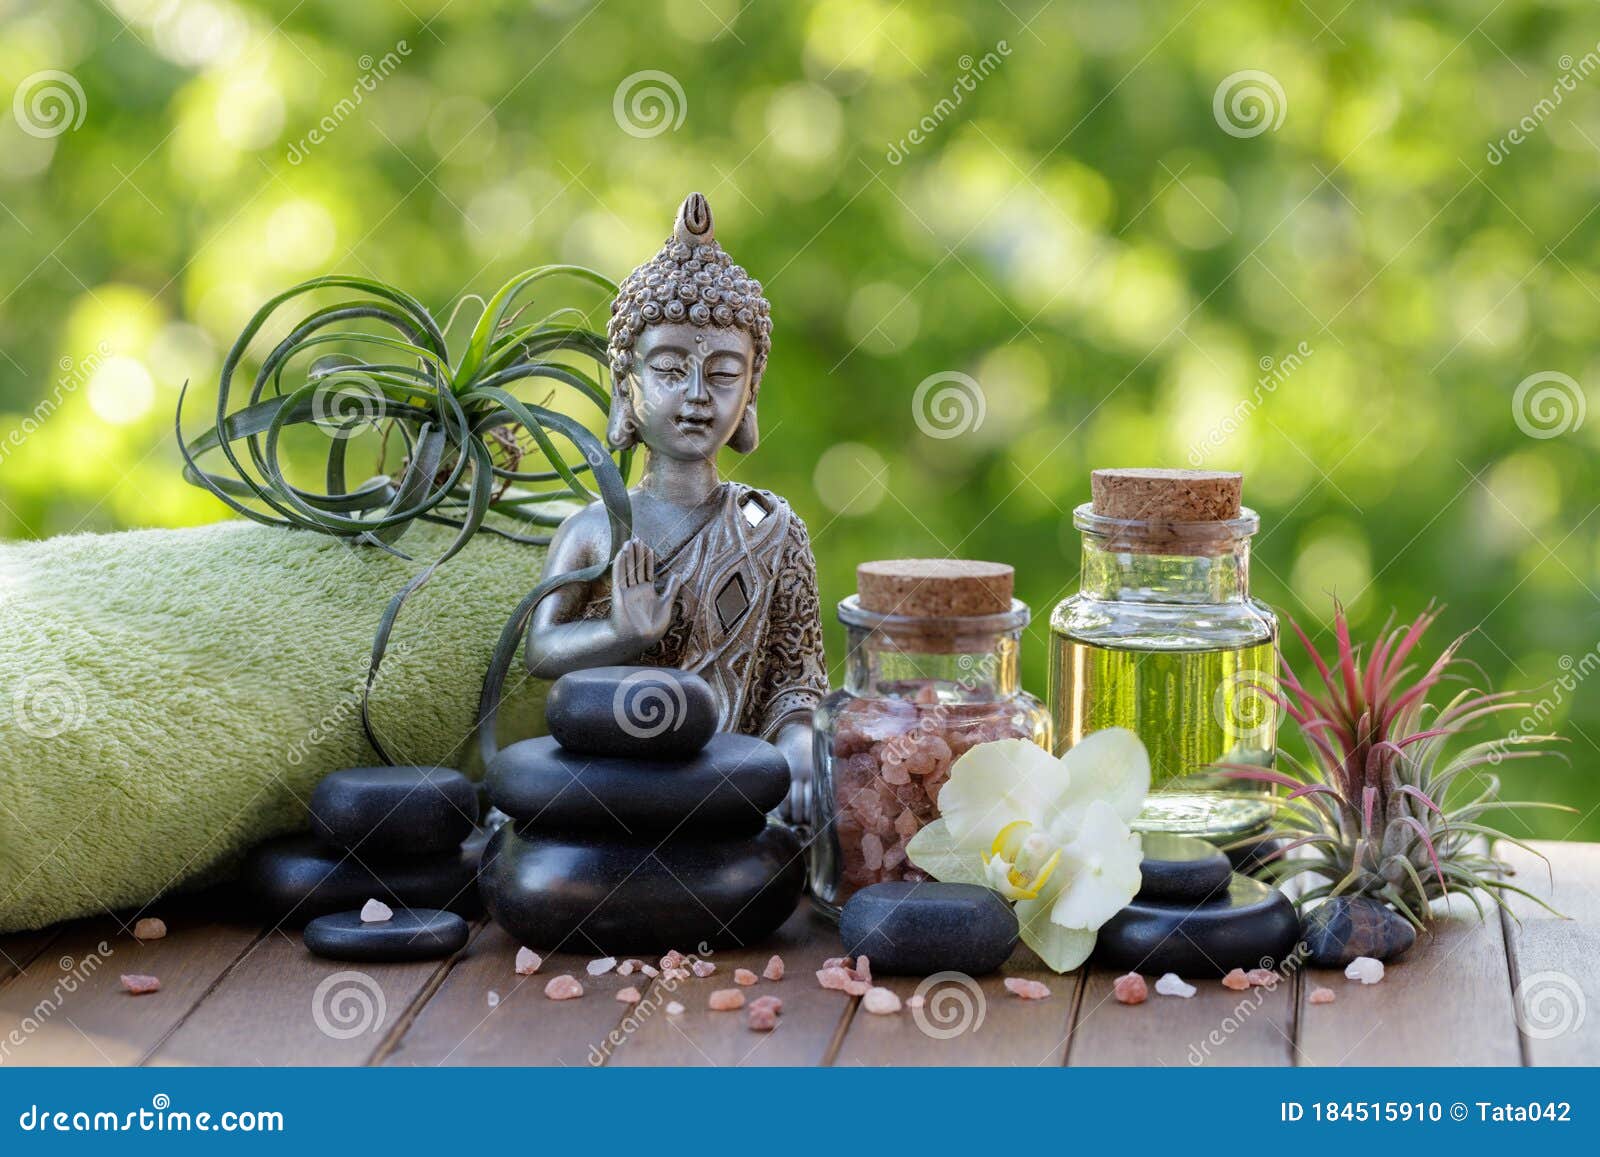 Wellness Buddha Royalty-Free Stock Photography | CartoonDealer.com ...